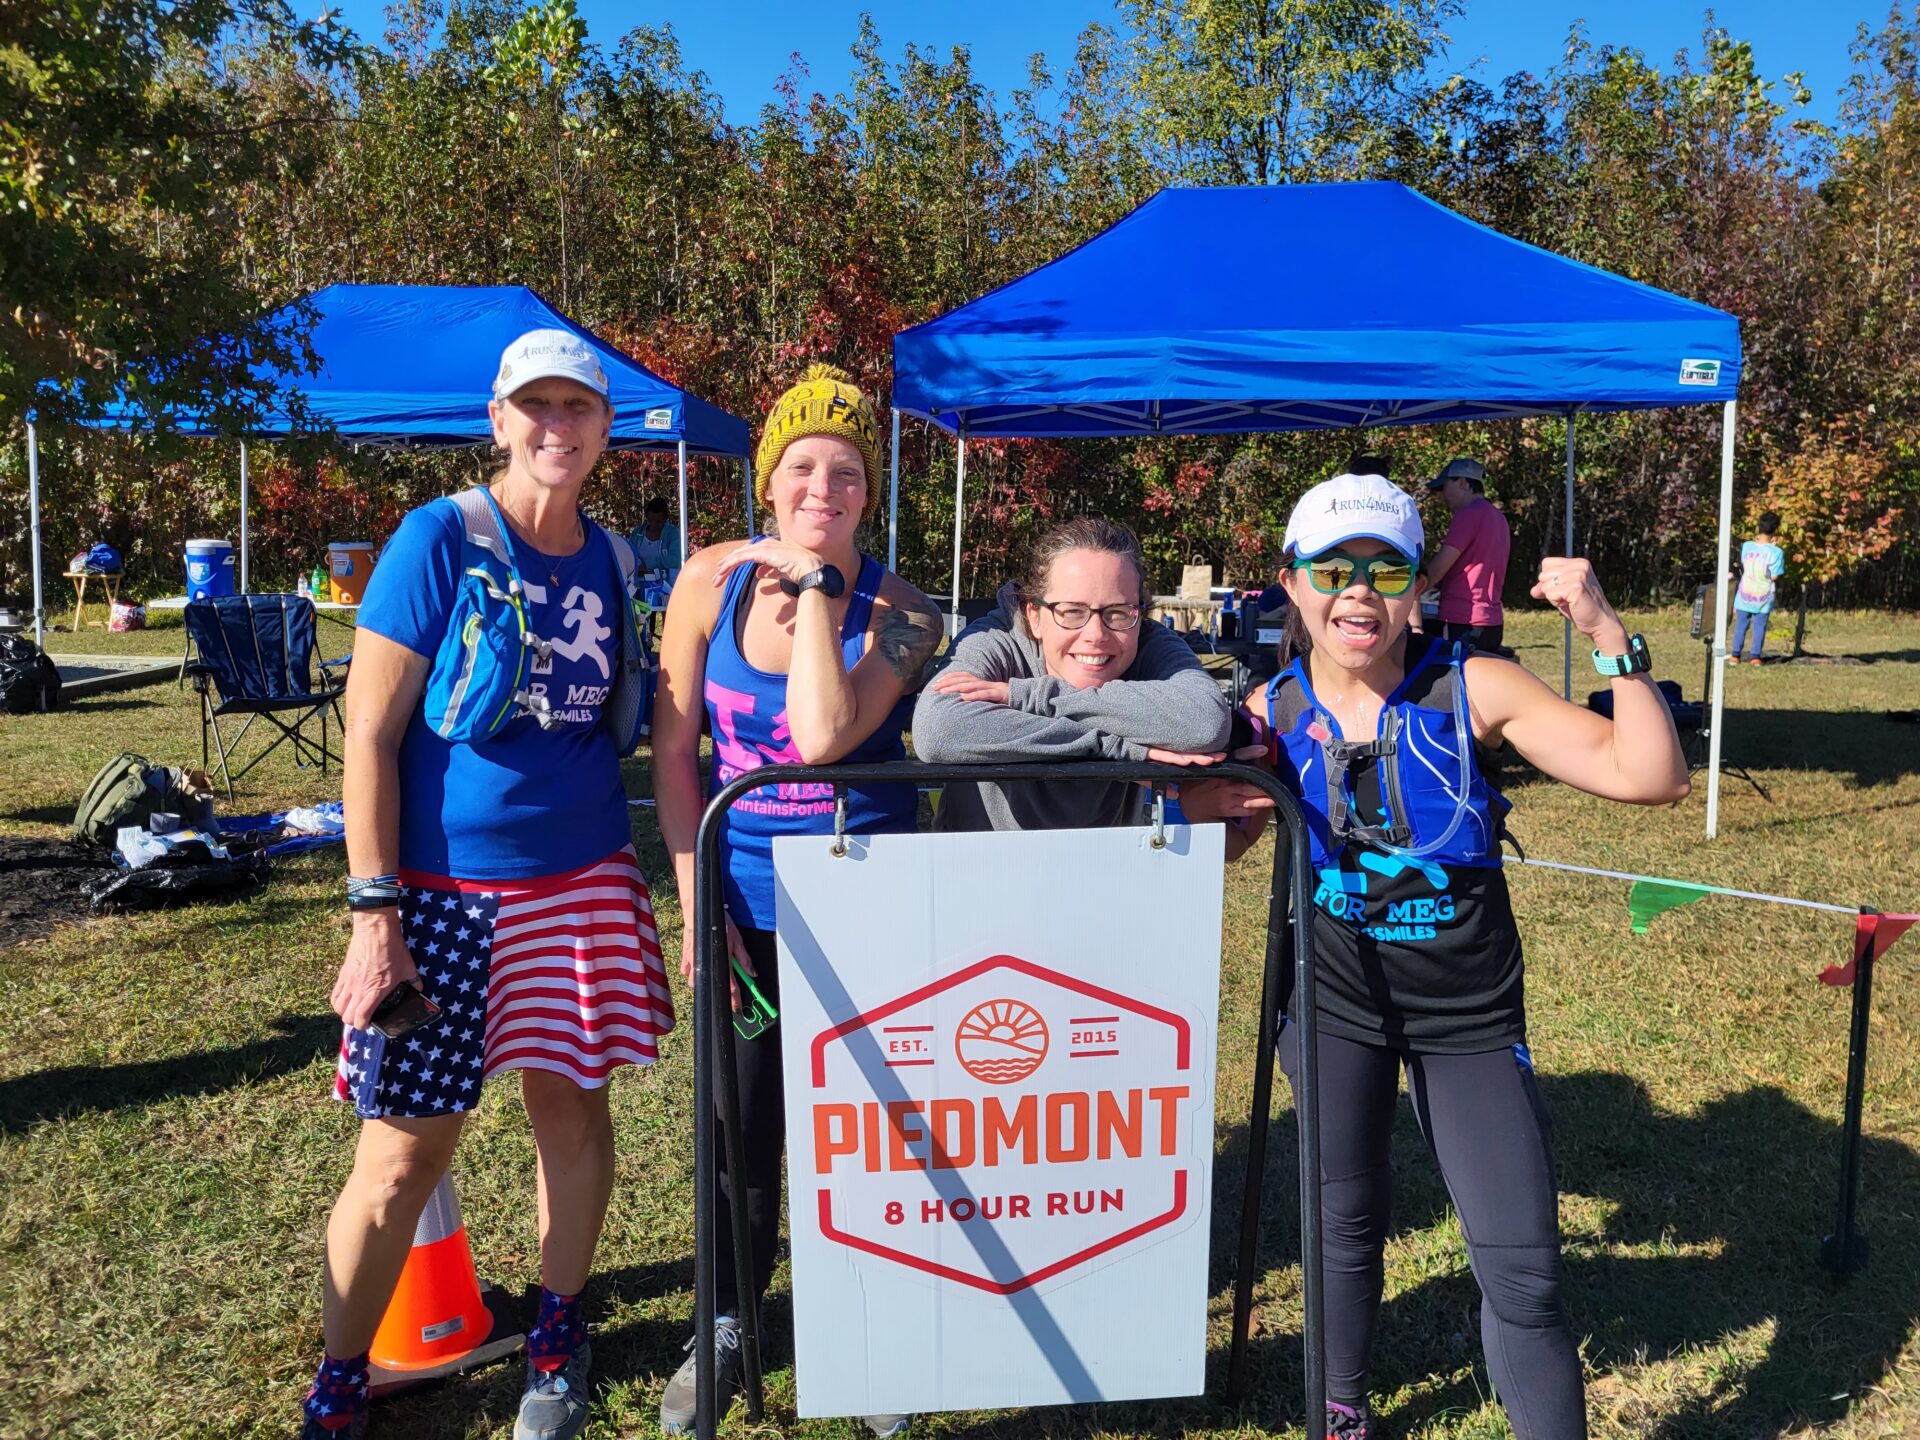 Piedmont 8-Hour Run